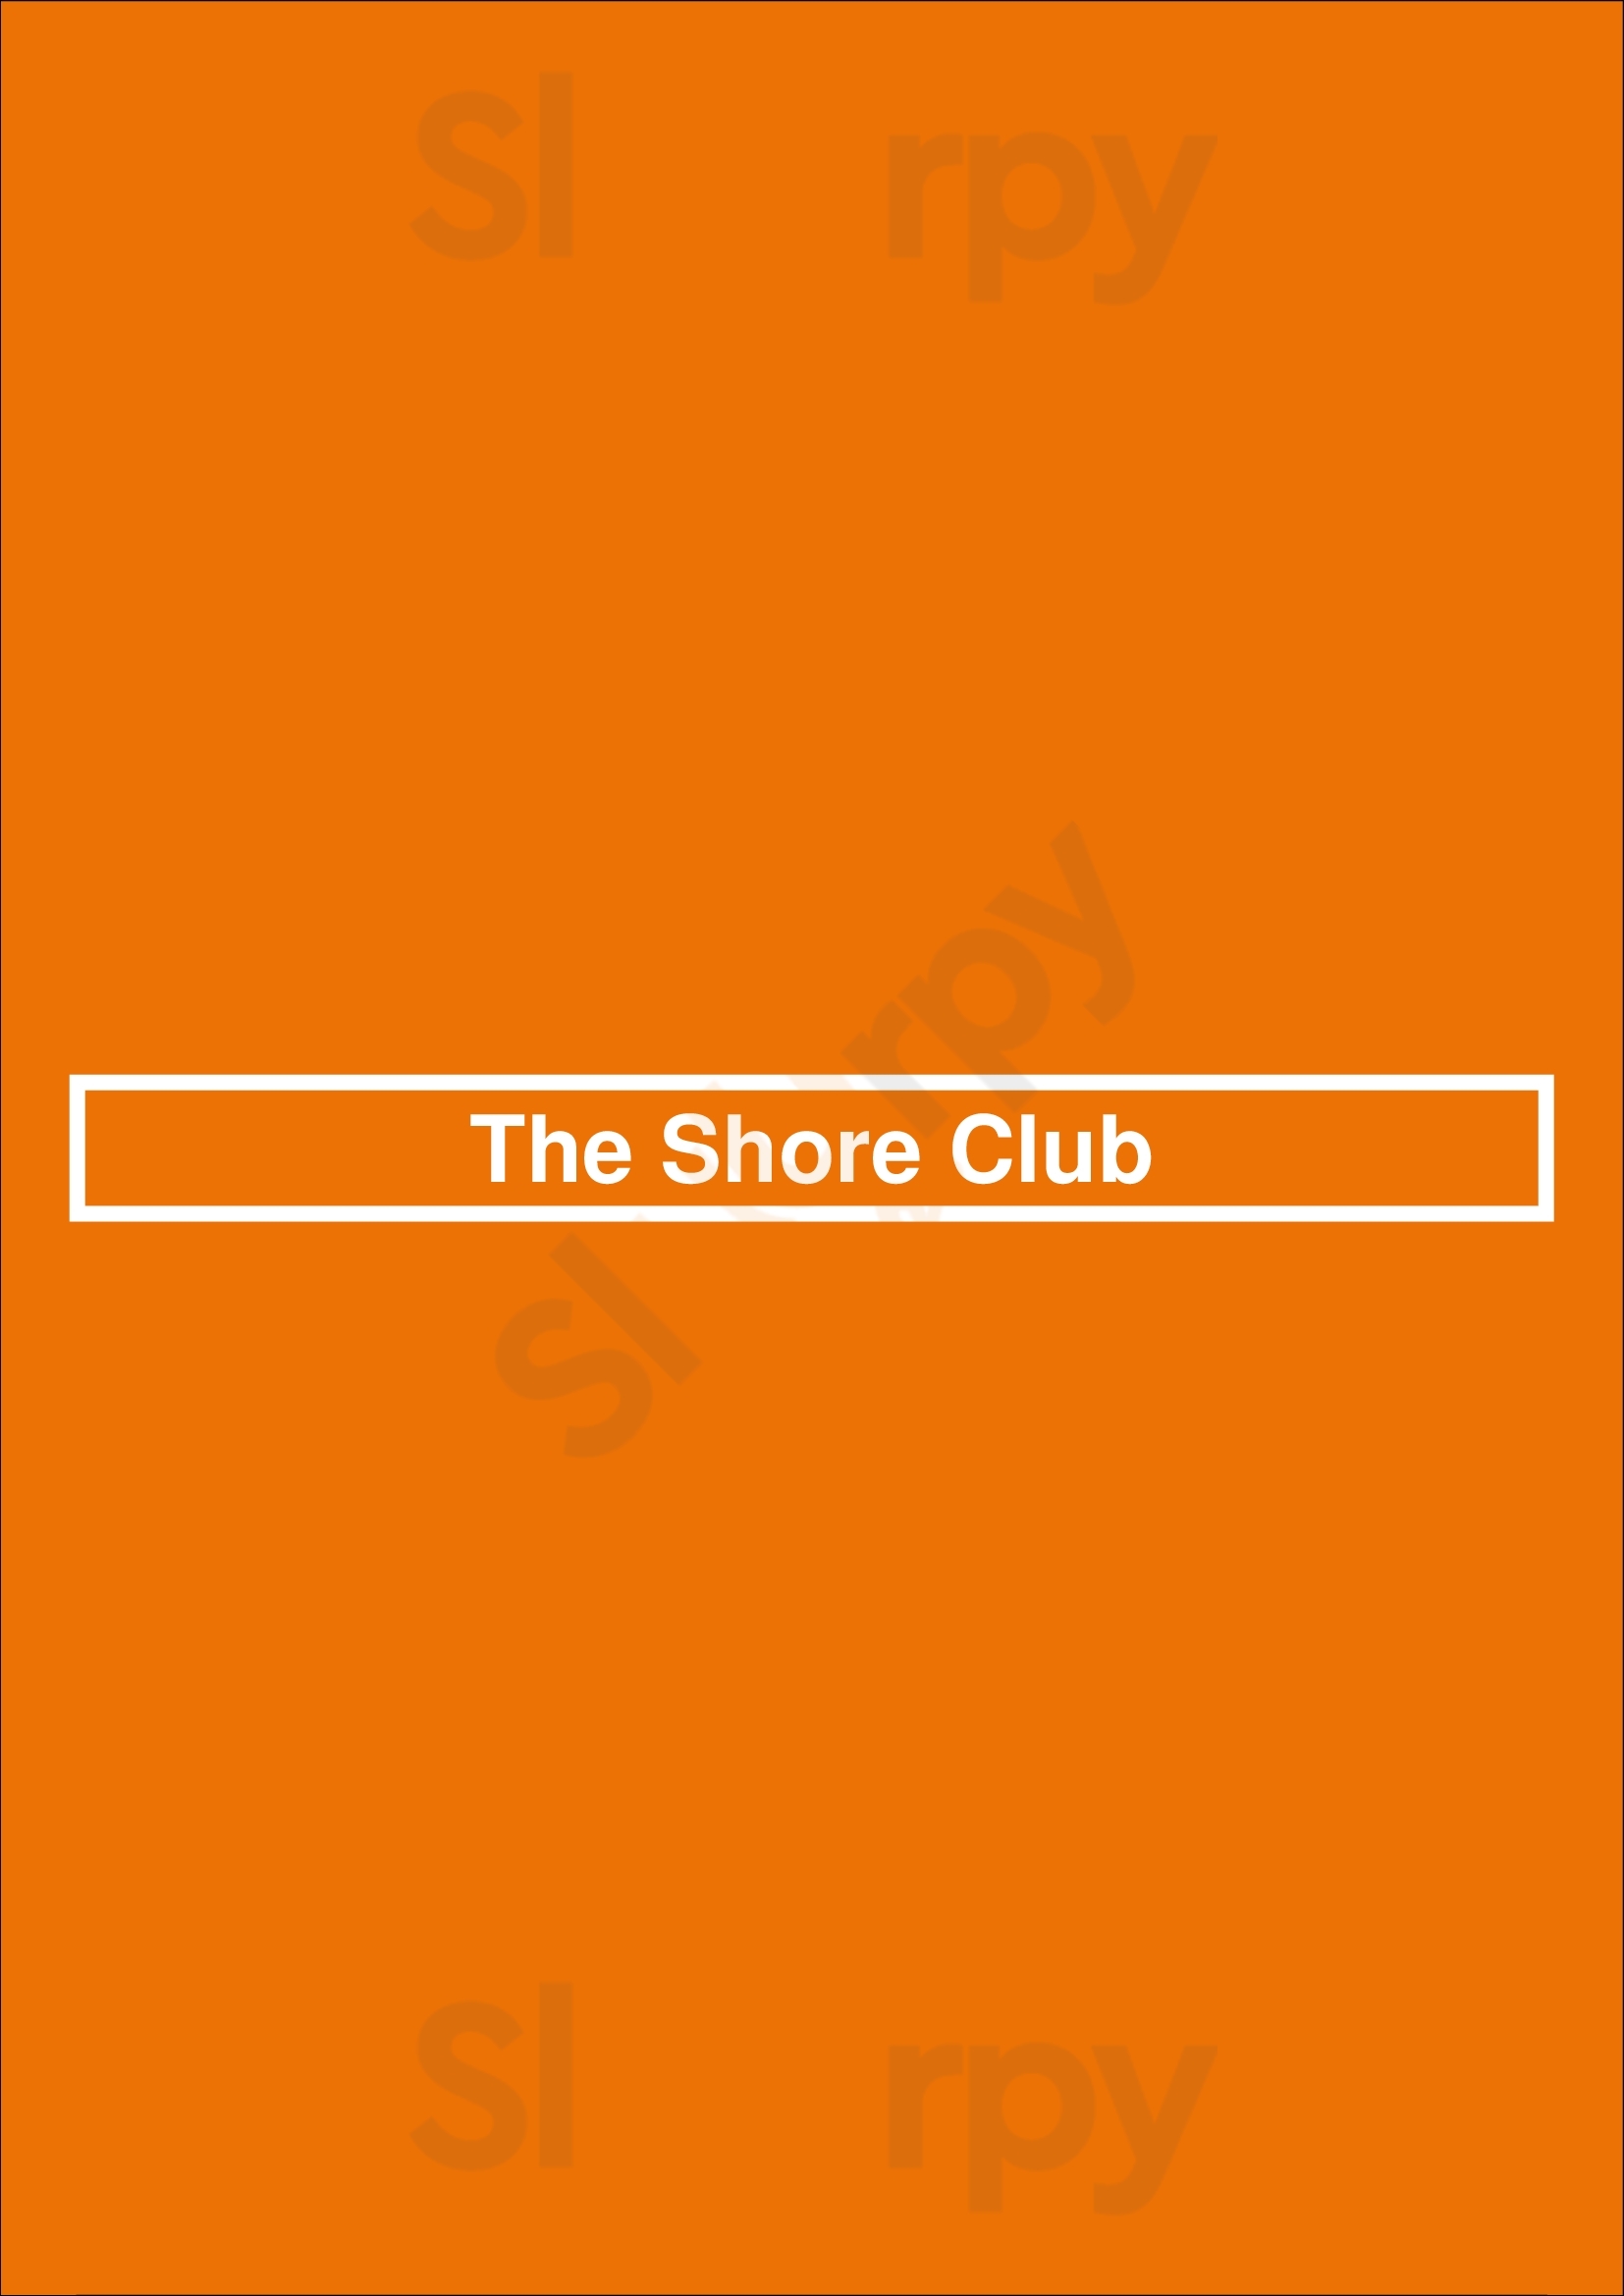 The Shore Club Toronto Menu - 1